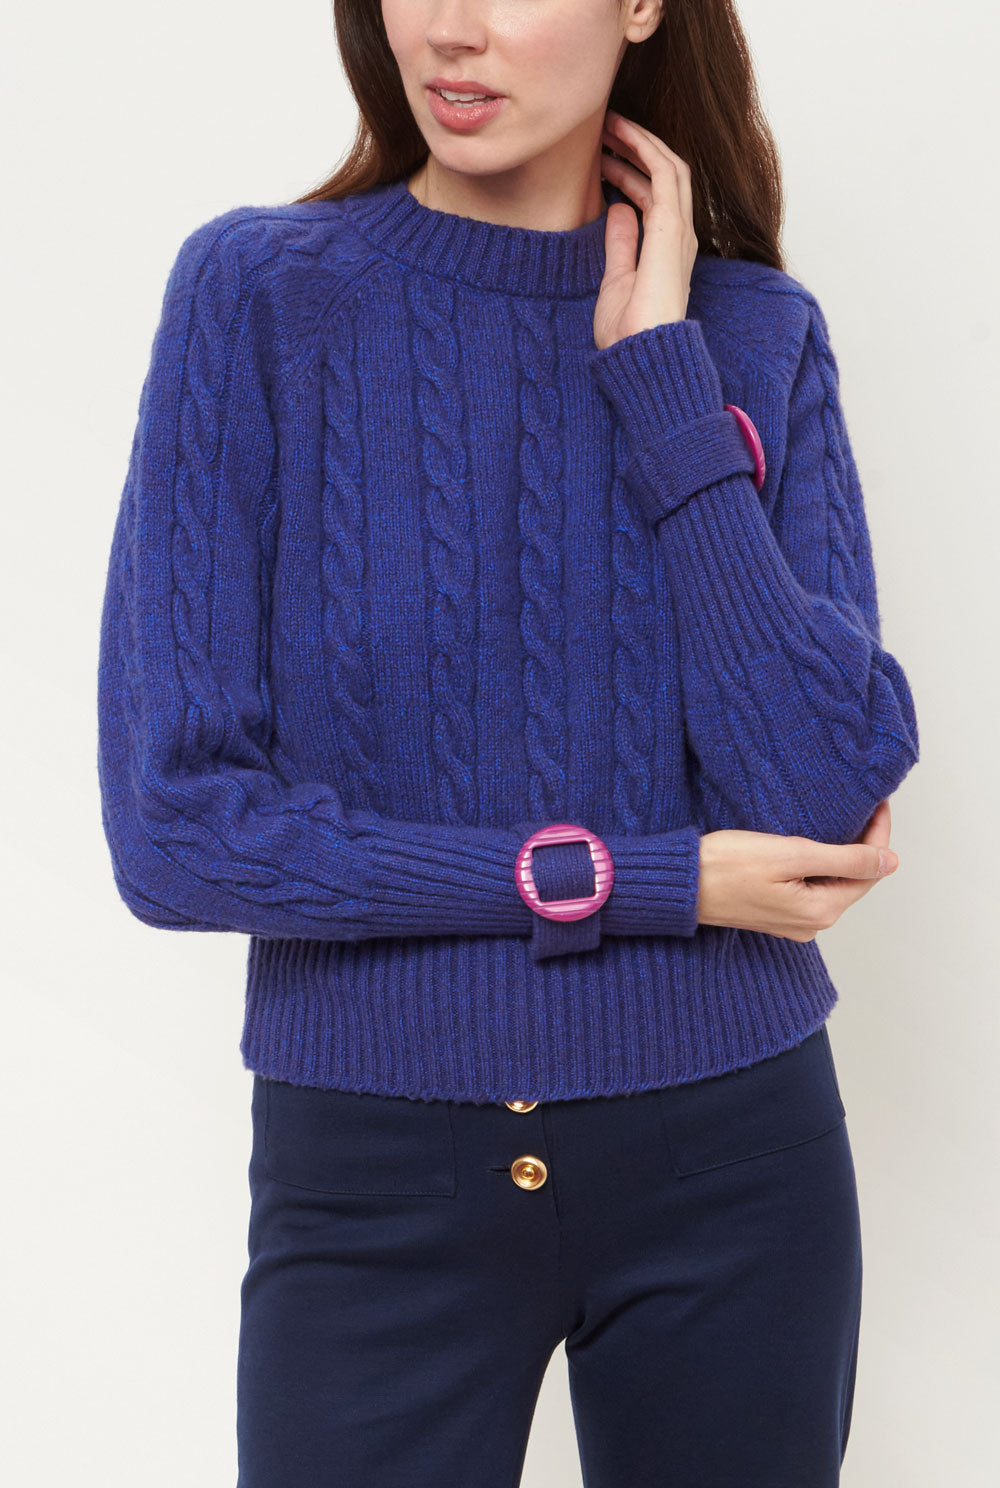 Clara Cable knit blue Sweaters Laia Alen 